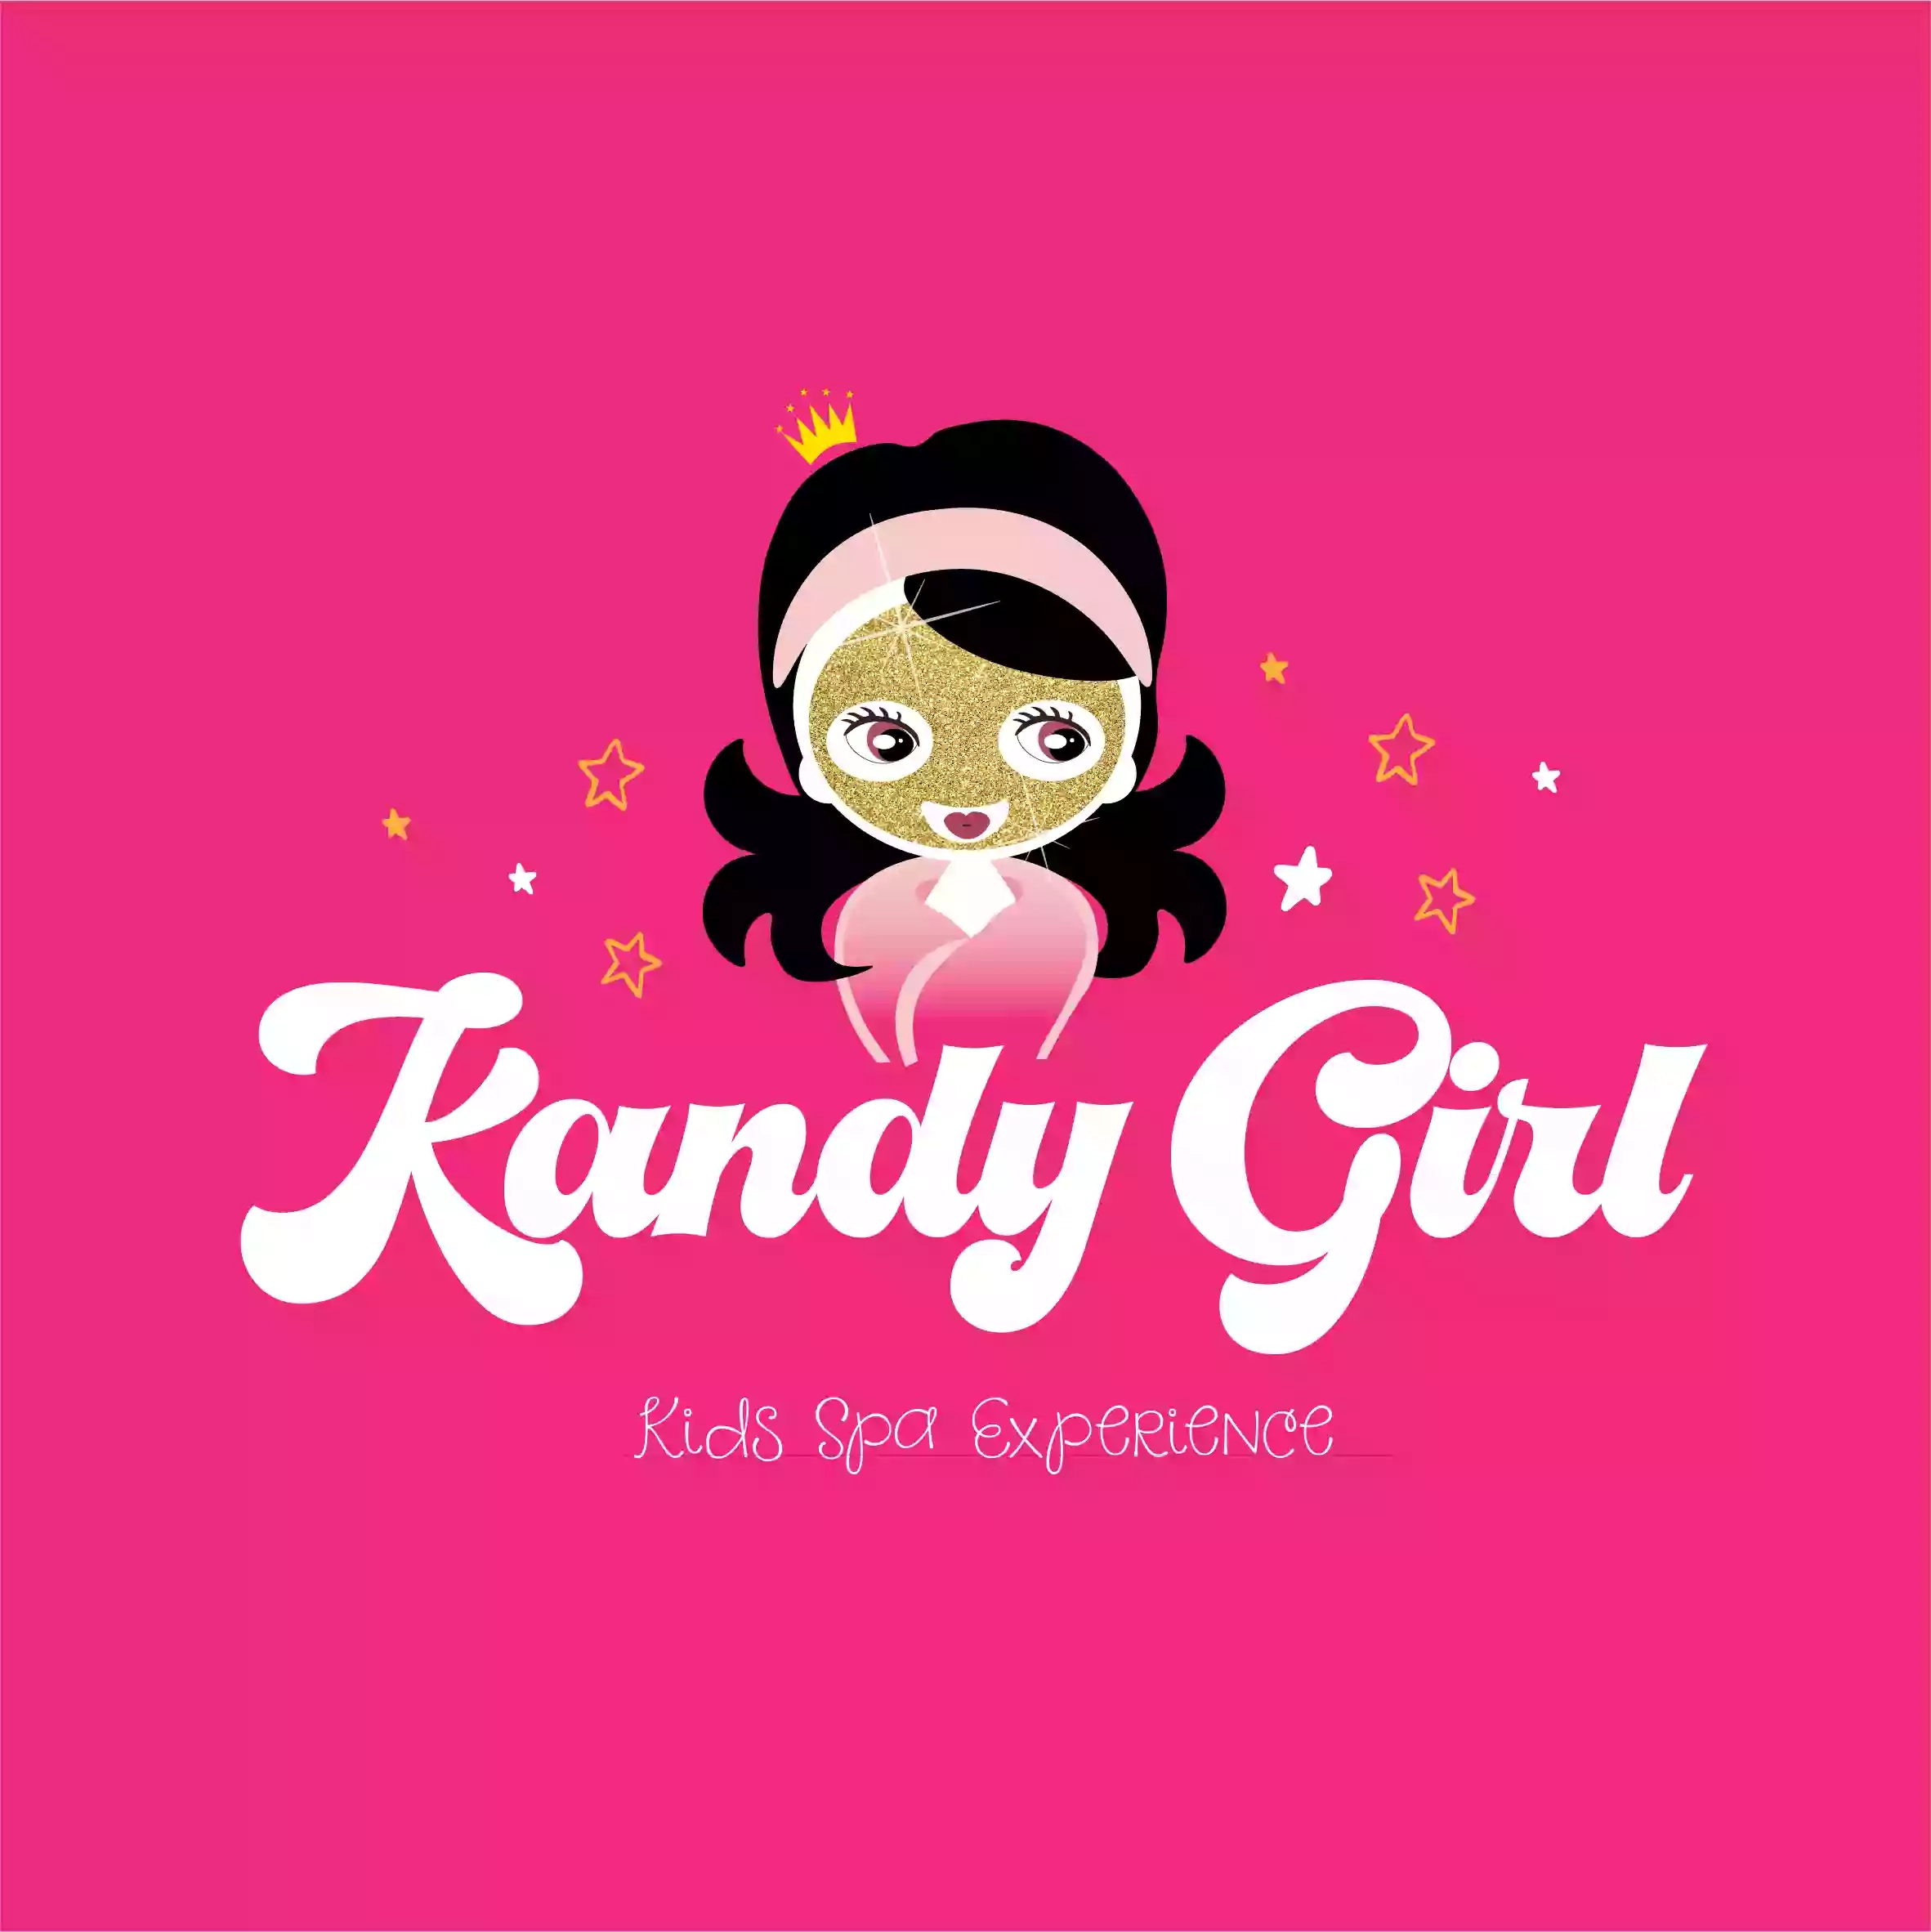 Kandy Girl